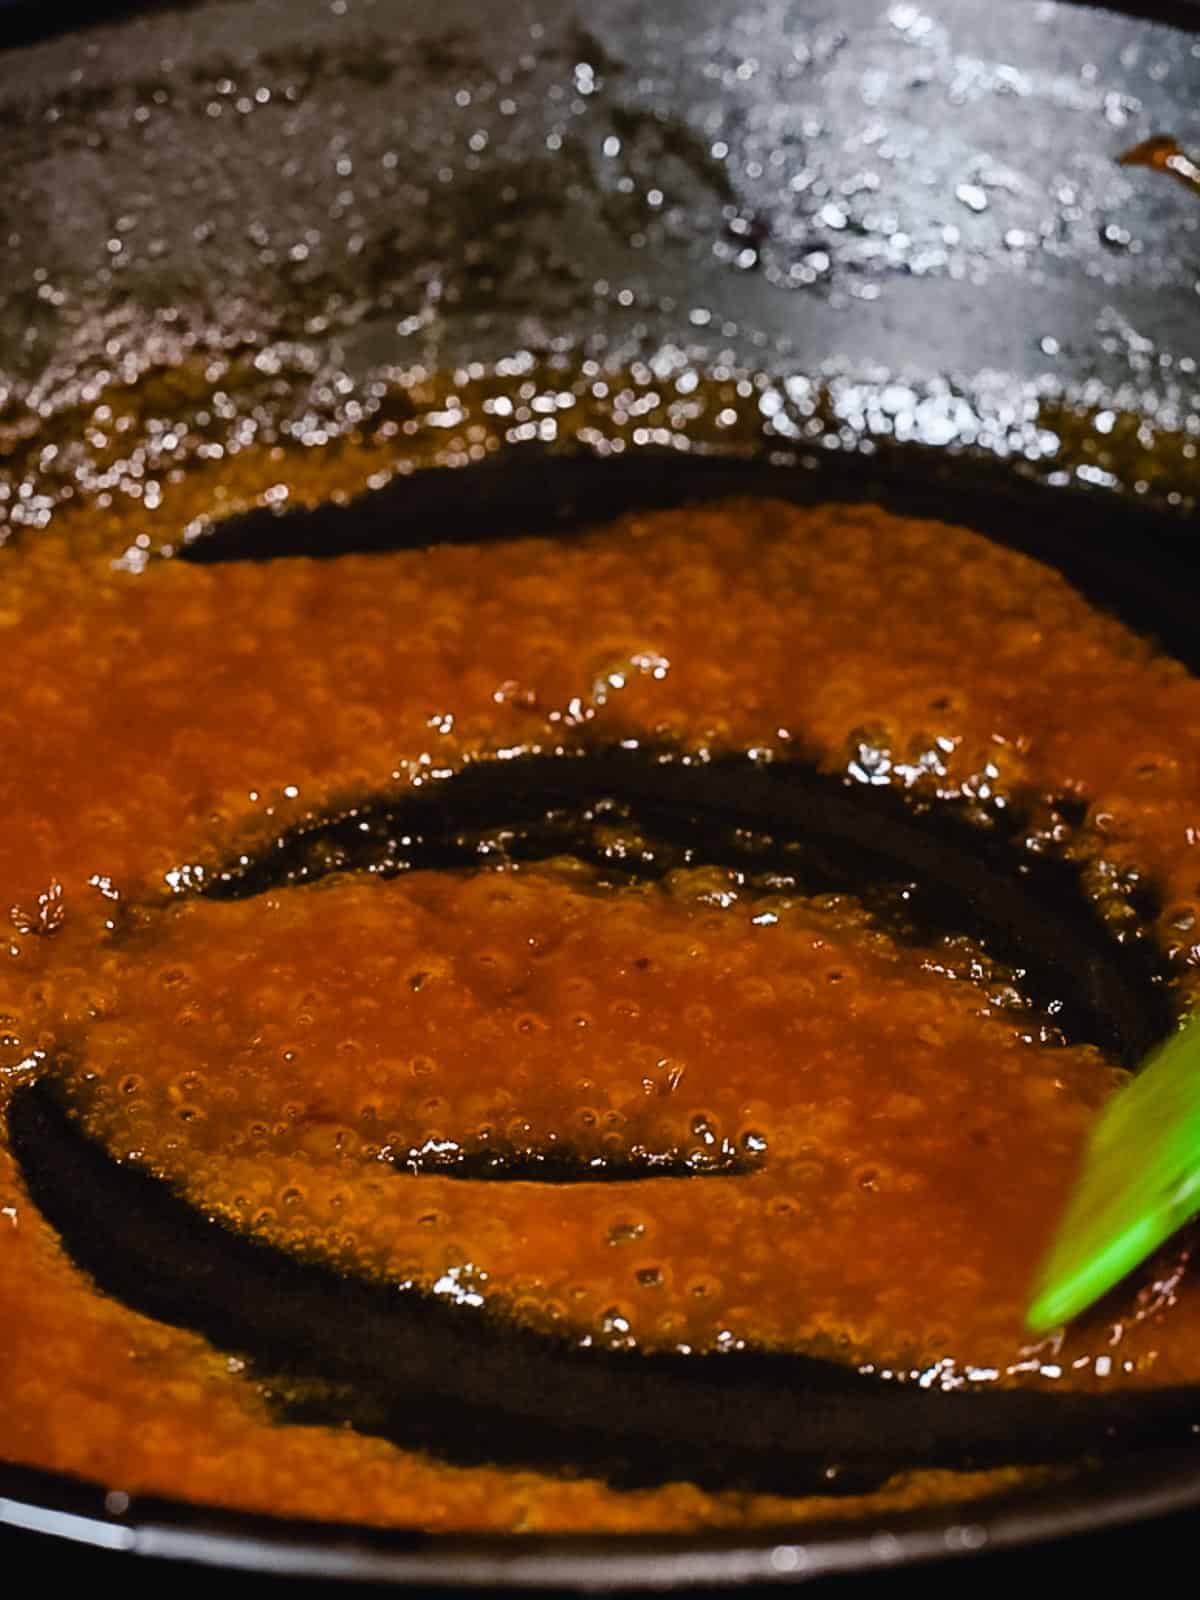 Sauce for hamburg steak reducing in a pan.